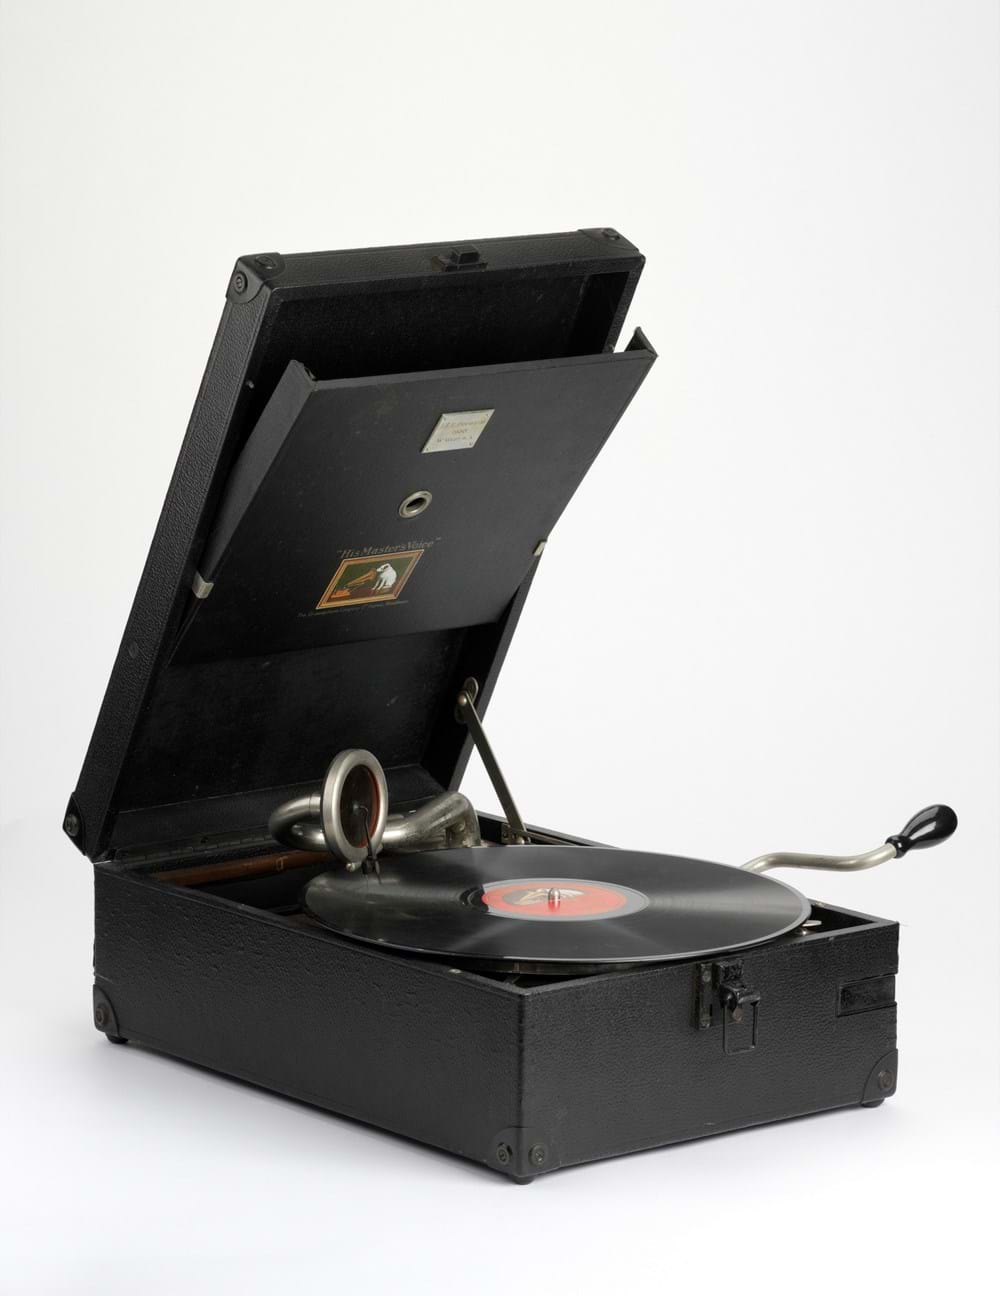 Black gramophone in a square case